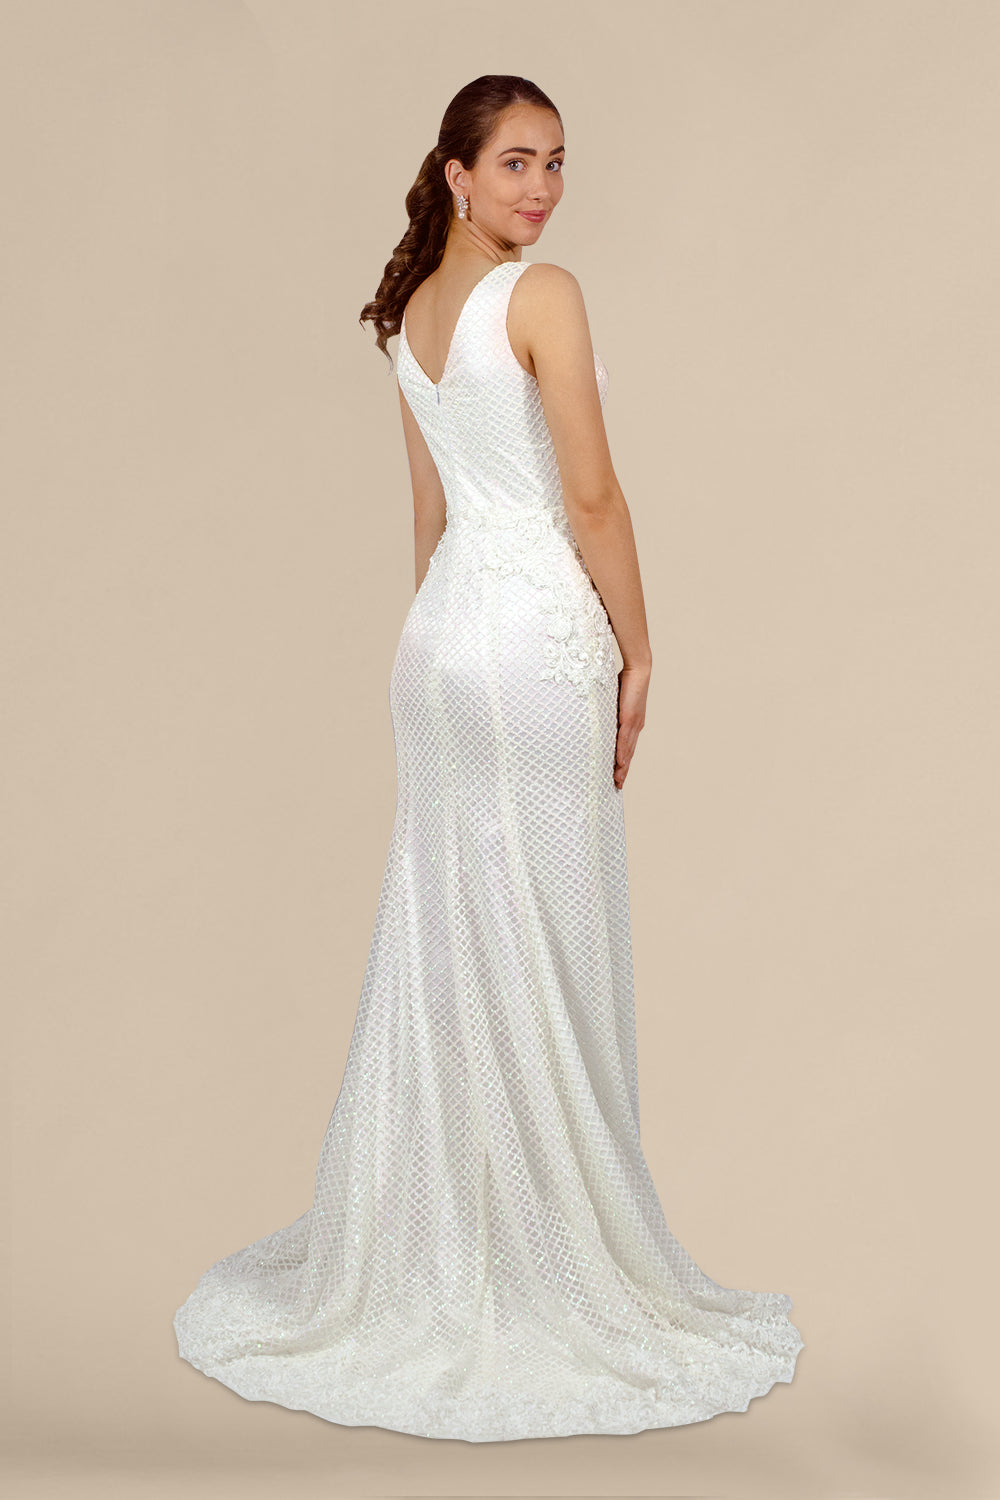 shimmer ivory white wedding dress custom made gowns australia envious bridal & formal